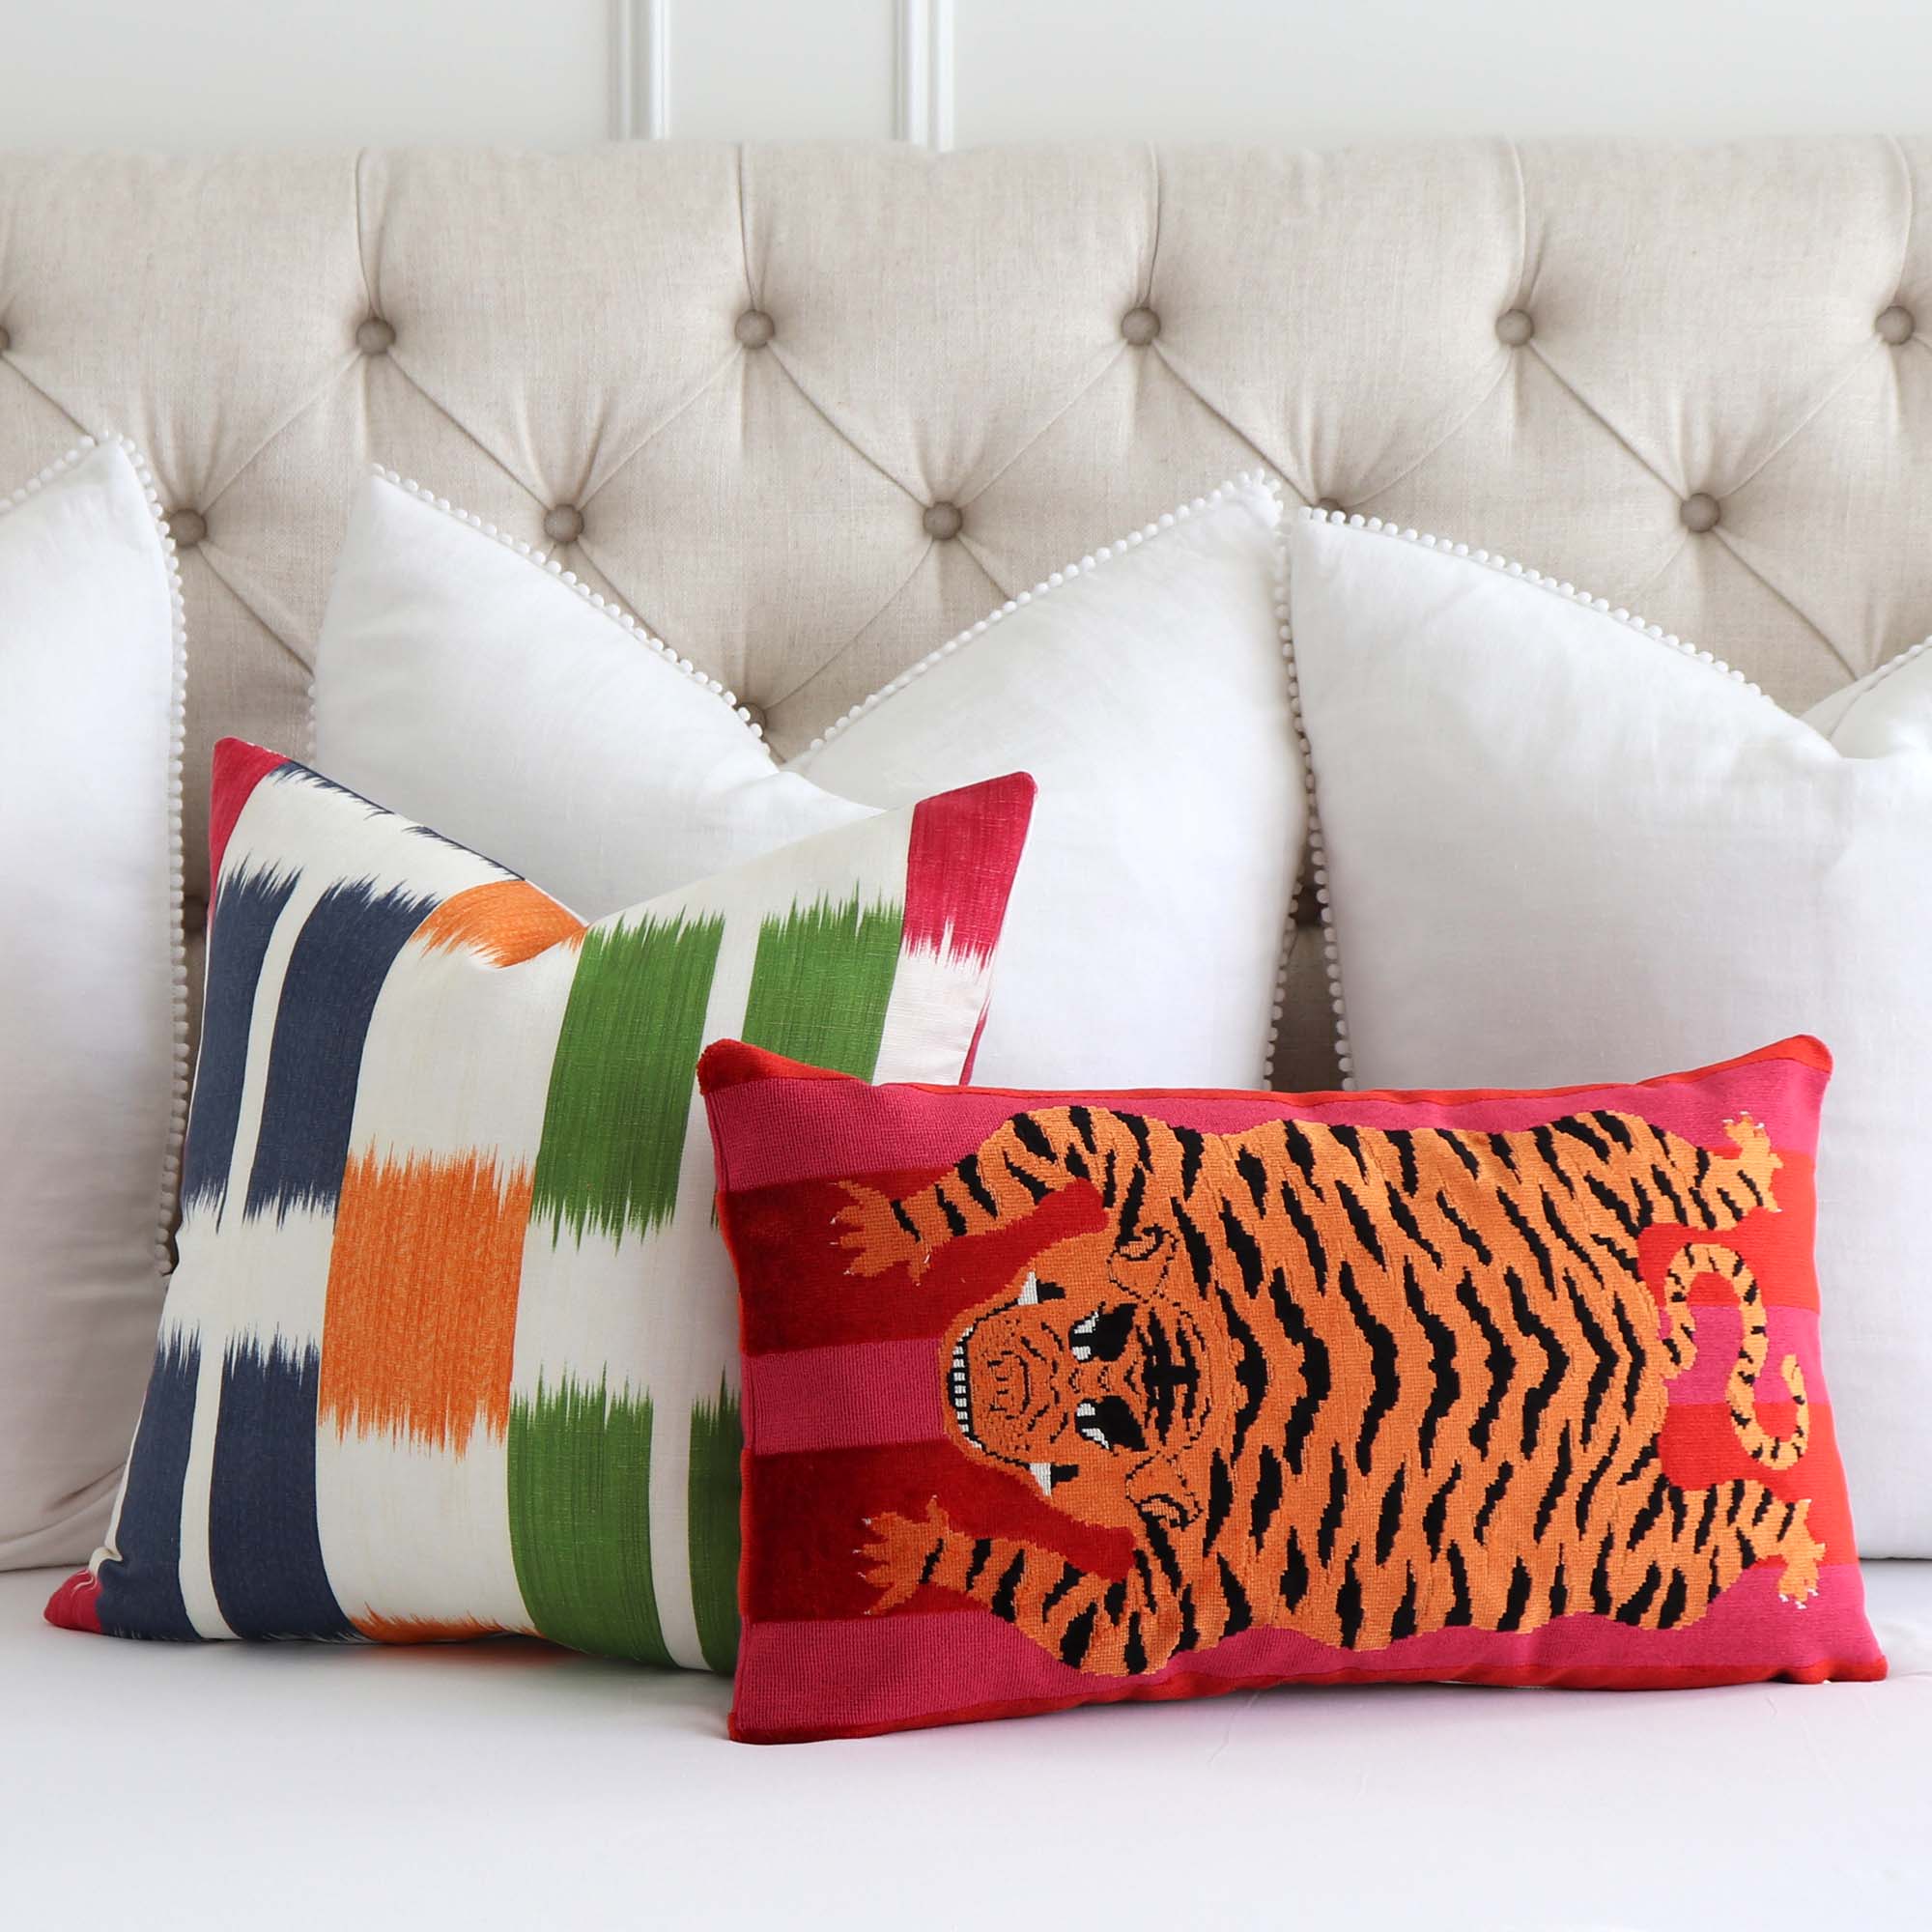 Schumacher Jokhang Tiger Velvet Red and Pink Luxury Designer Throw Pillows with White Big Euro Shams